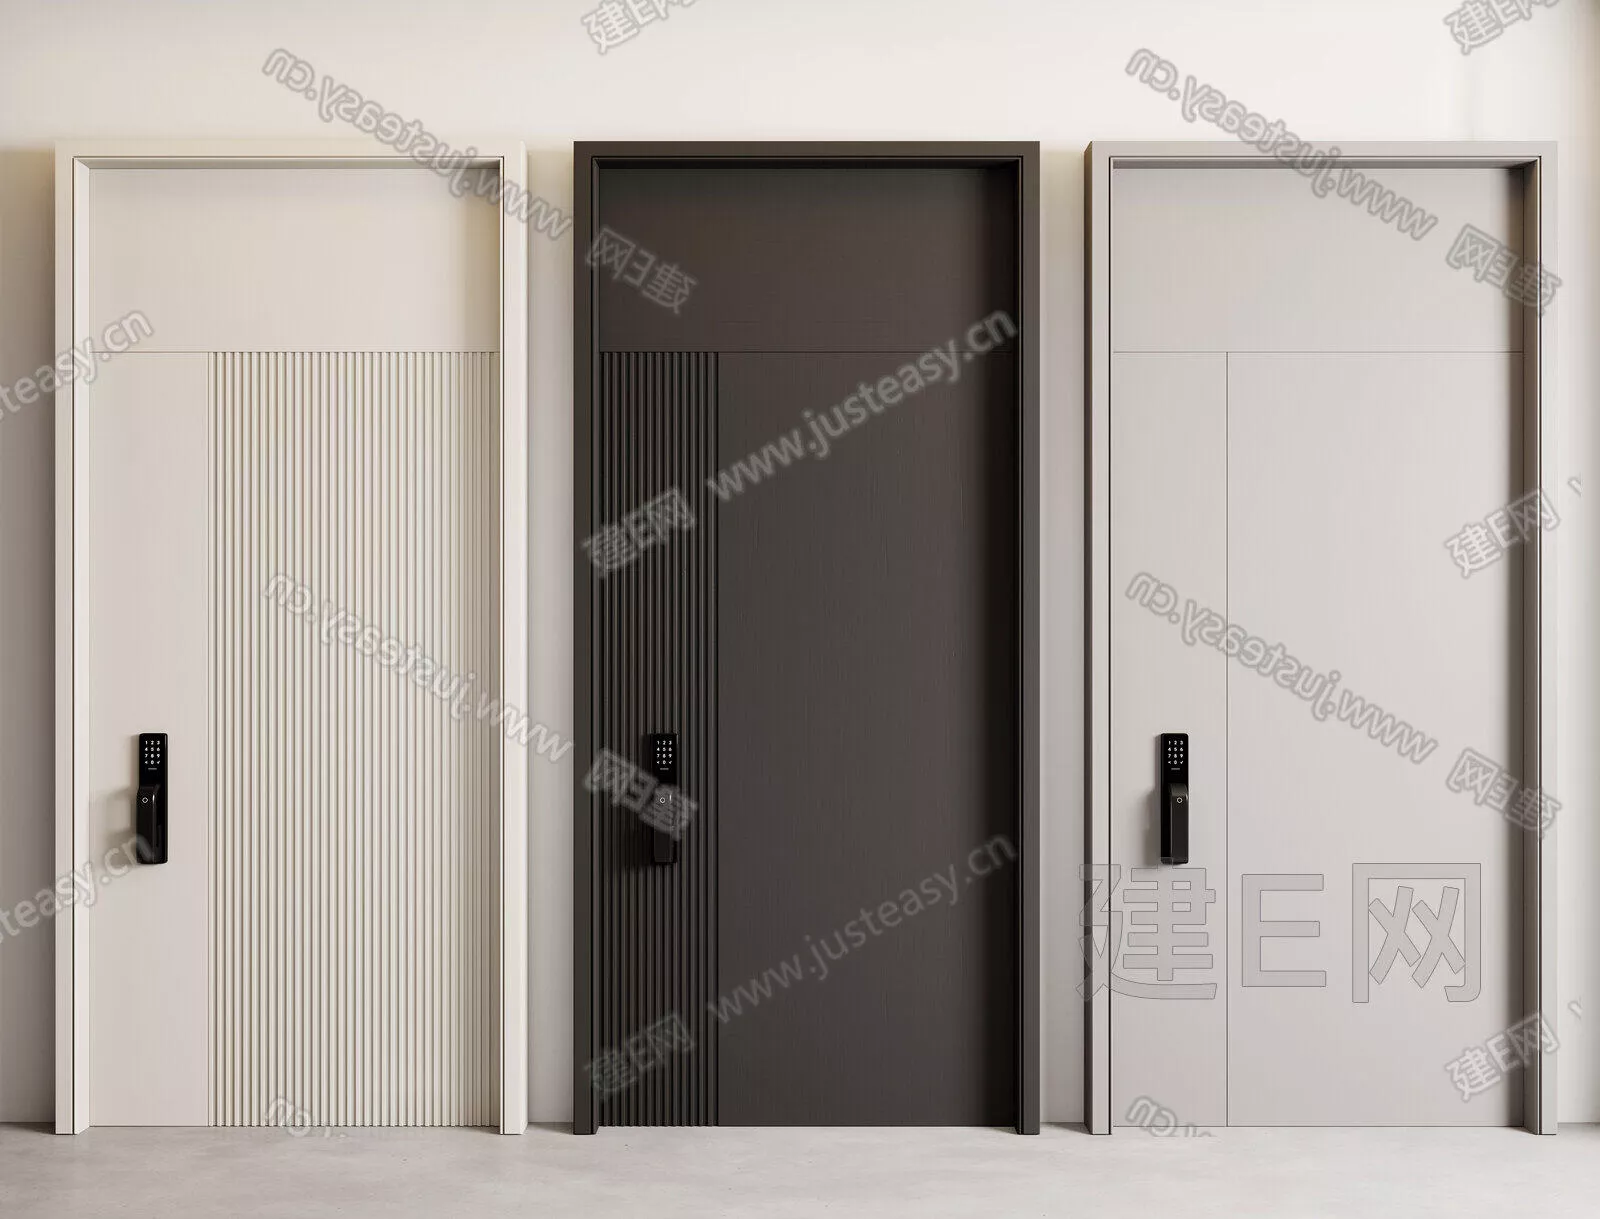 MODERN DOOR AND WINDOWS - SKETCHUP 3D MODEL - ENSCAPE - 115887465